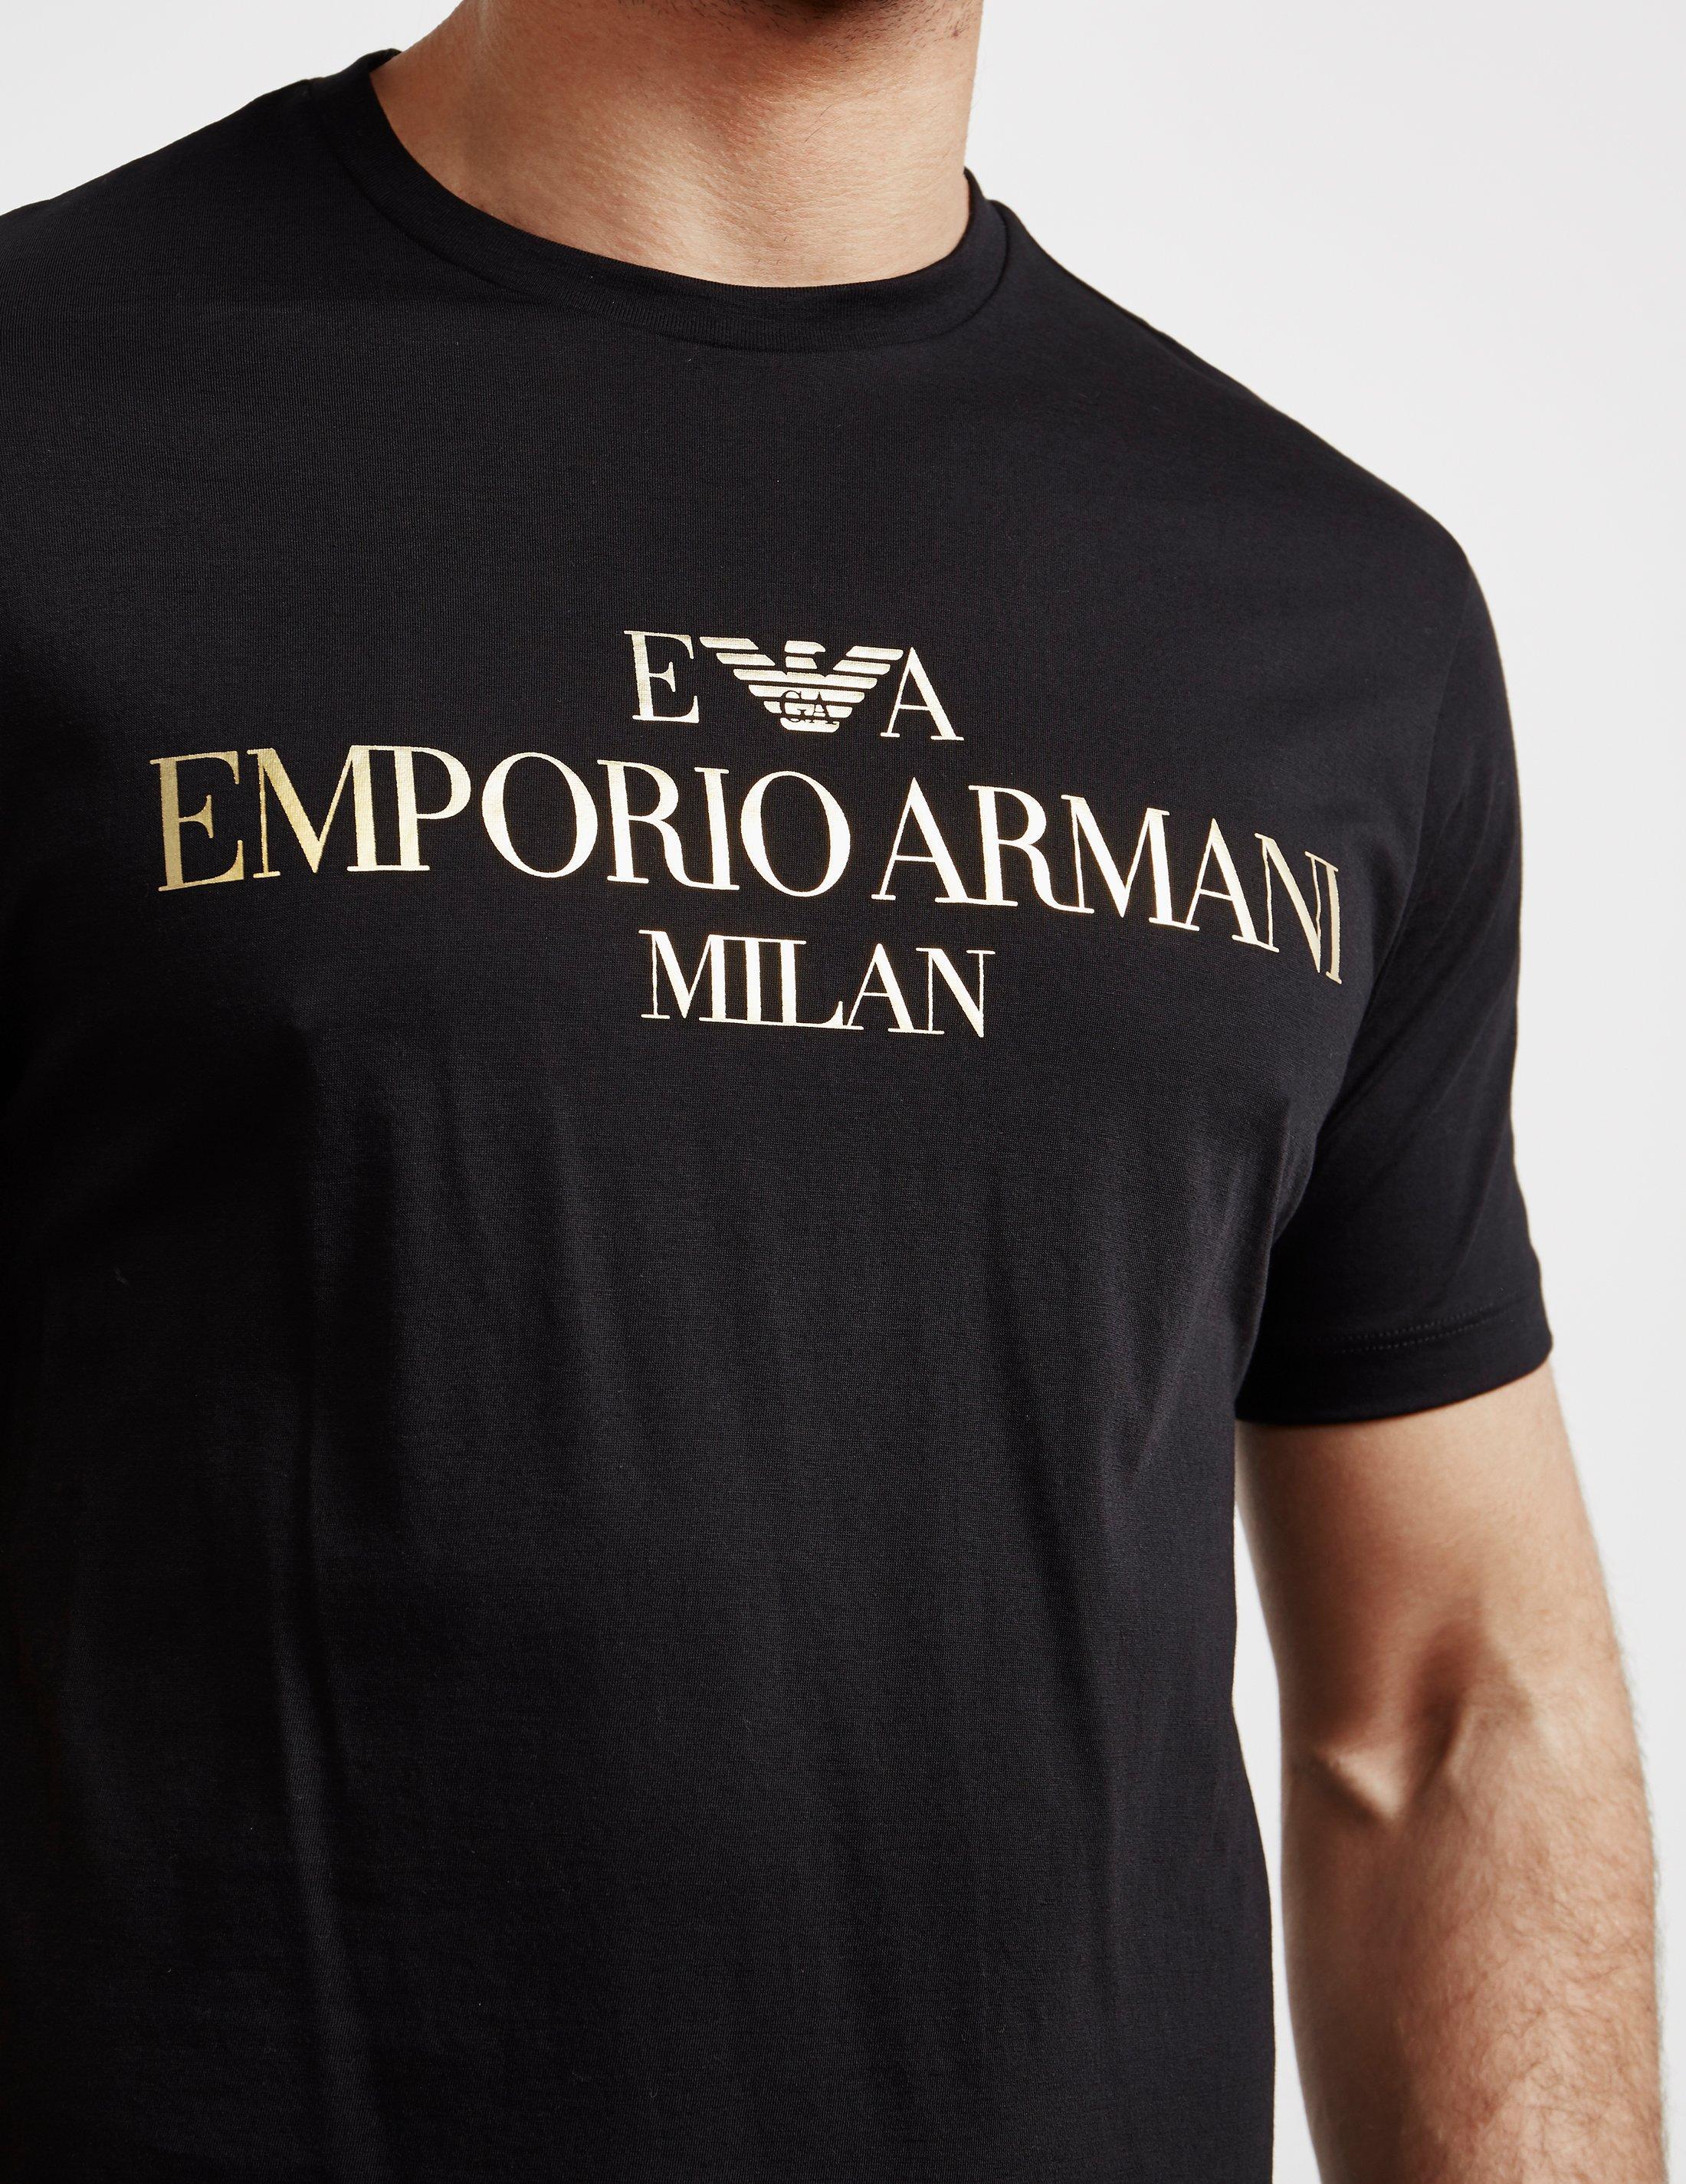 Emporio Armani Cotton Milan Short Sleeve T-shirt Black for Men - Lyst